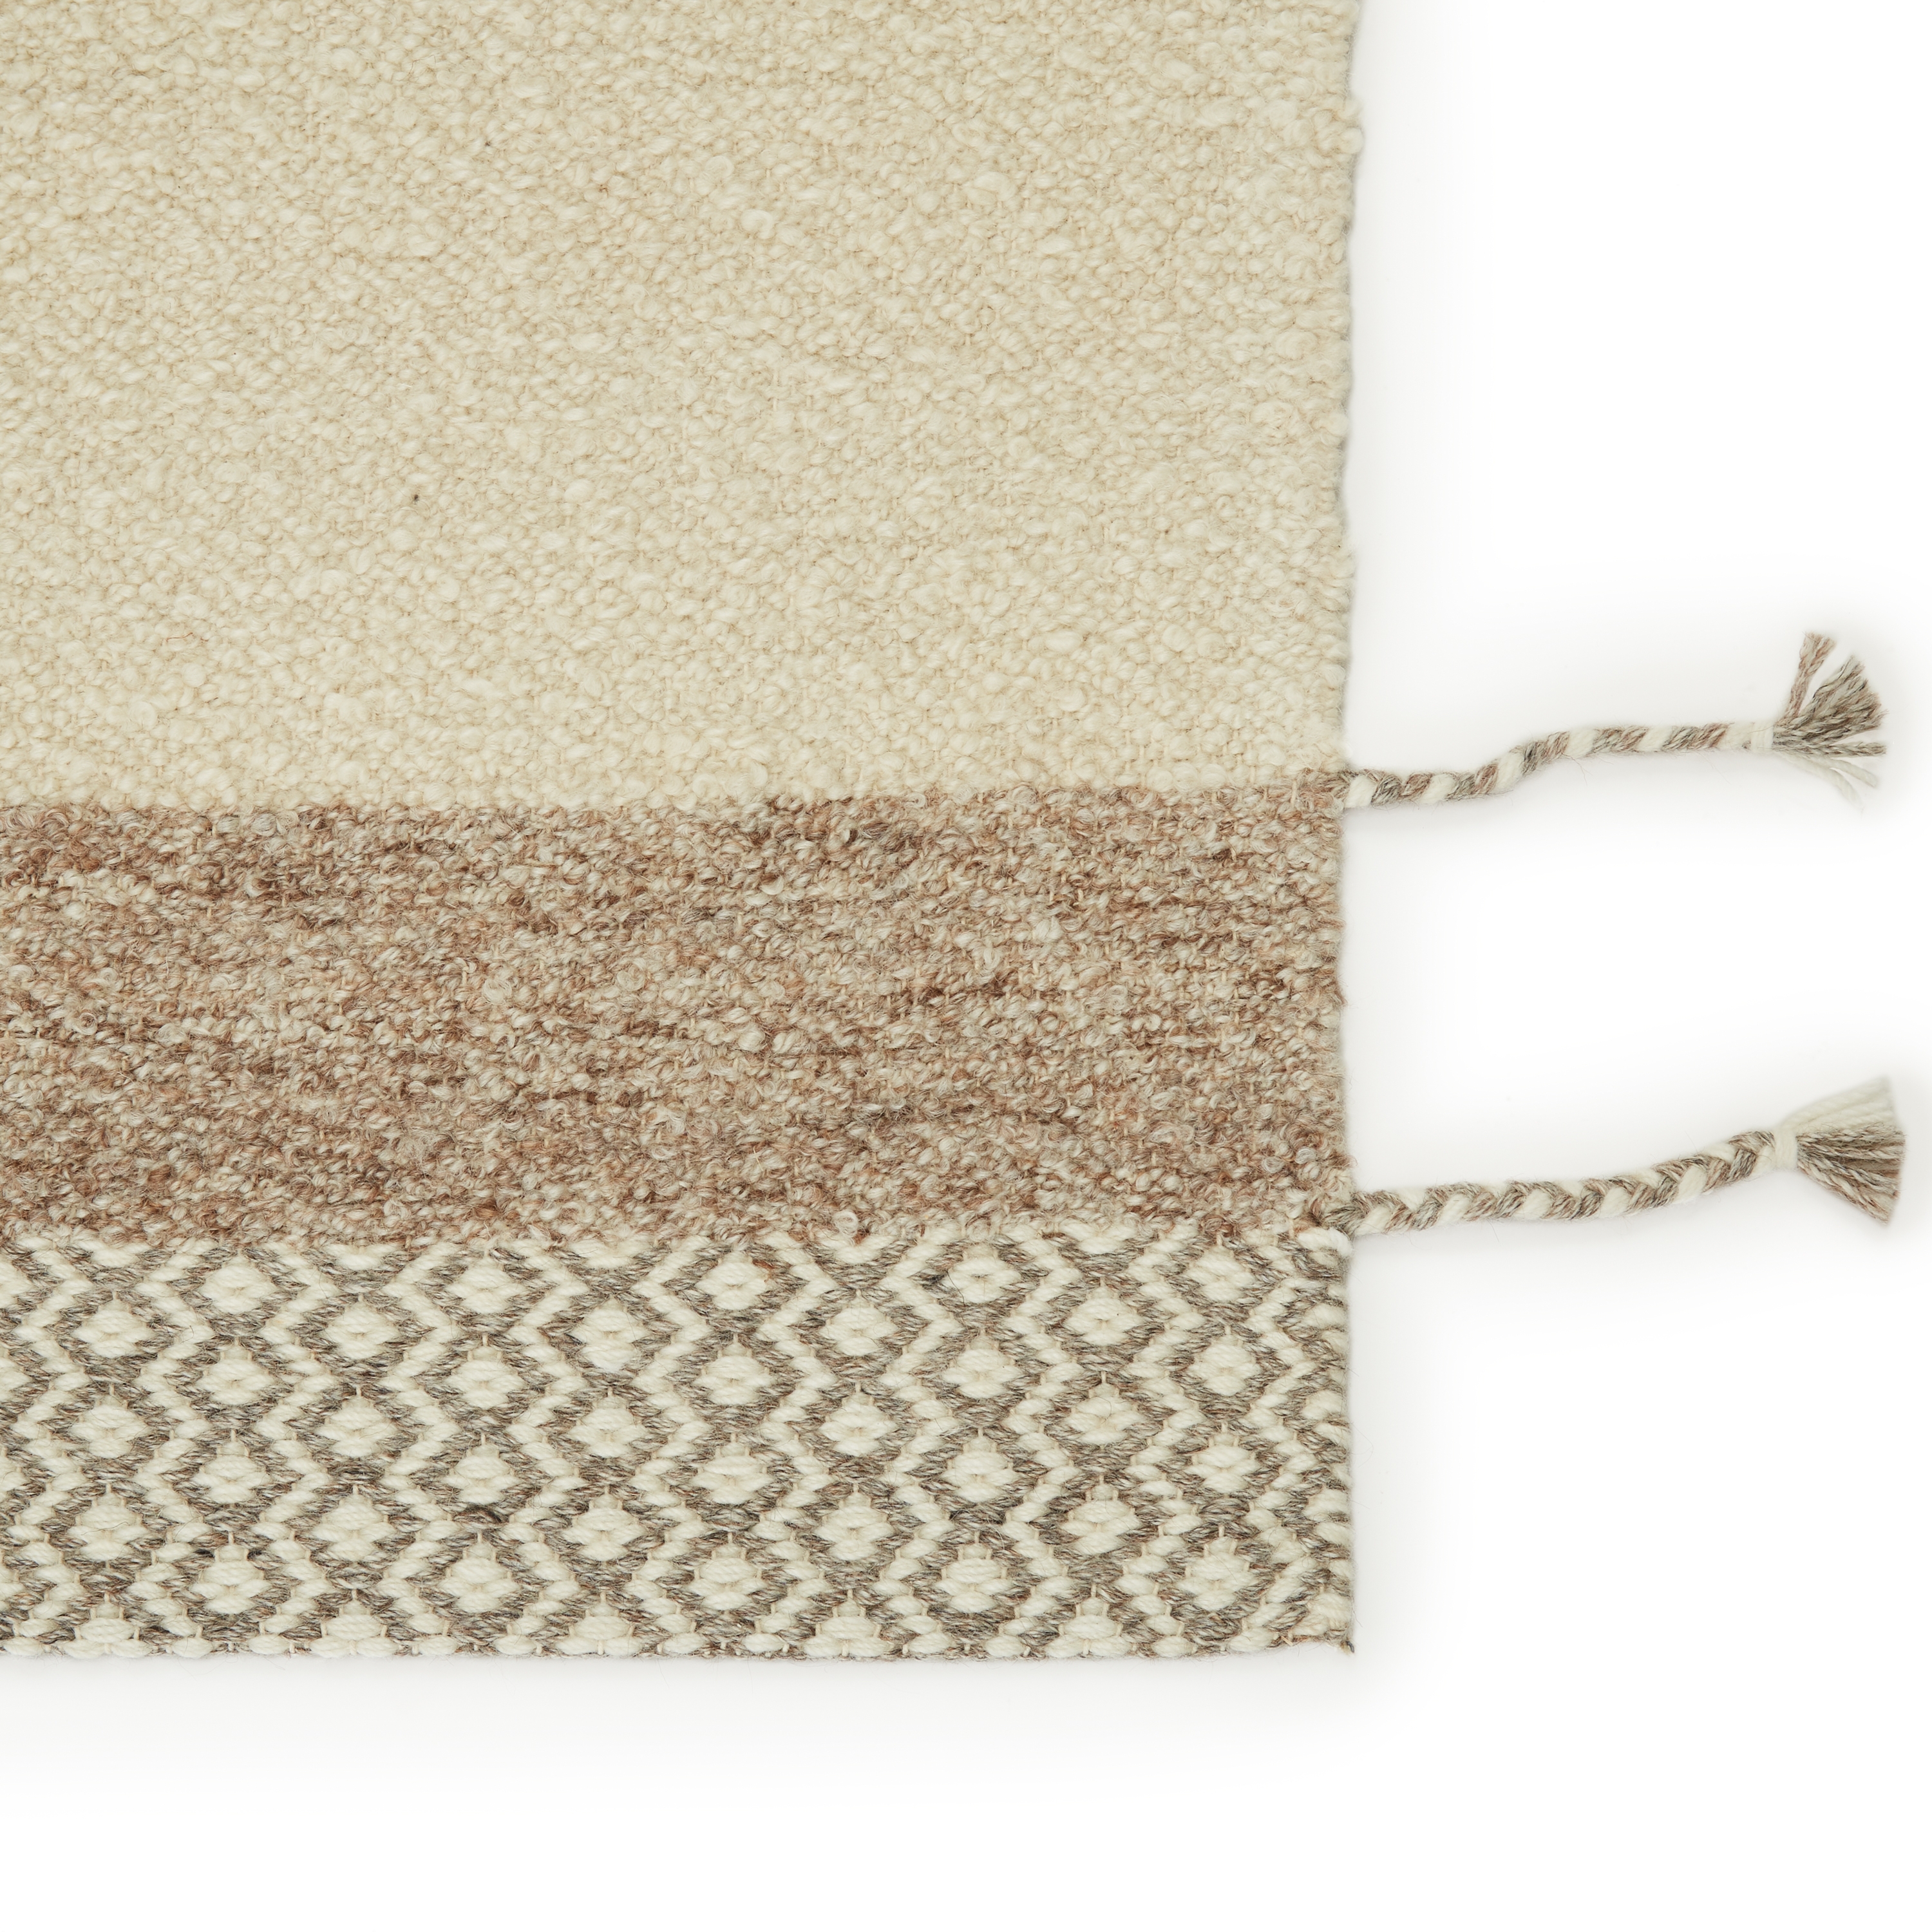 Calva Handmade Geometric Cream/ Light Tan Area Rug (5'X8') - Image 3